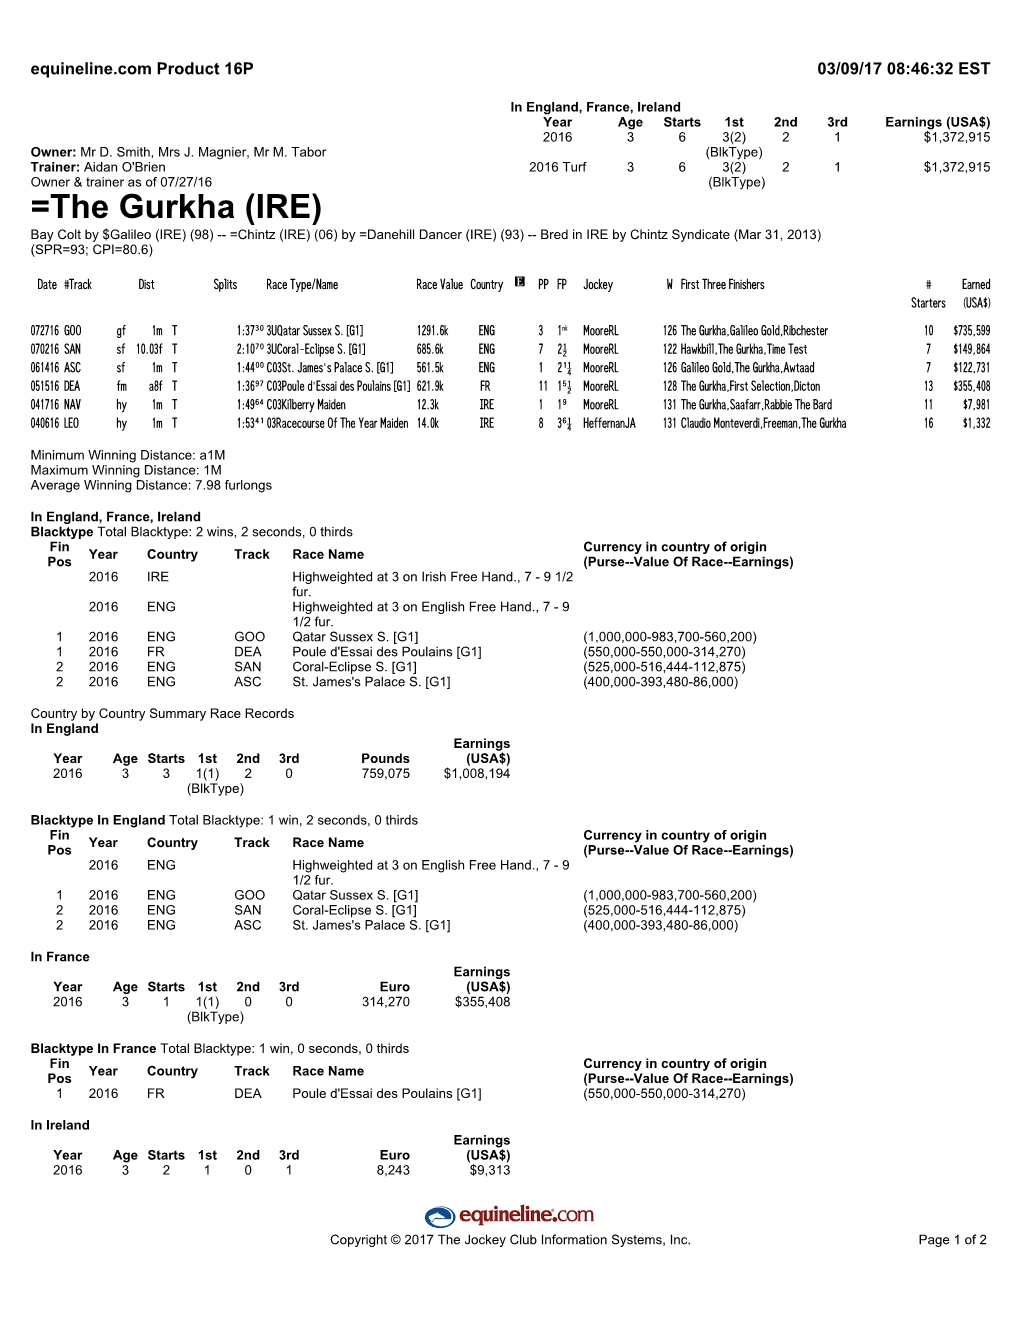 =The Gurkha (IRE)